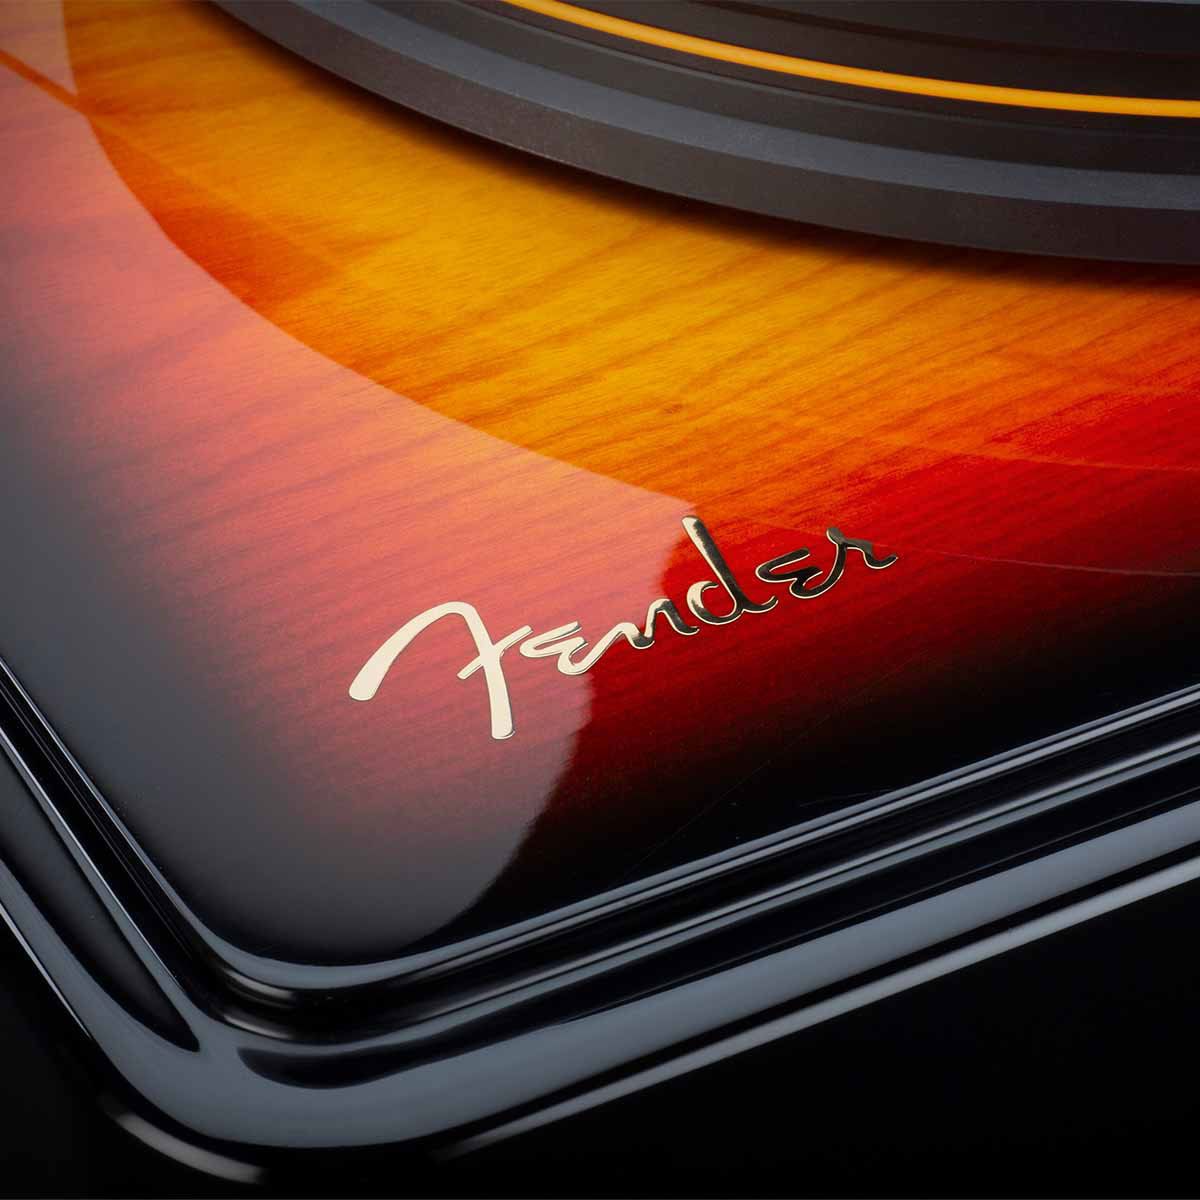 MoFi Fender PrecisionDeck Turntable, Sunburst, detailed view of sunburst and Fender logo